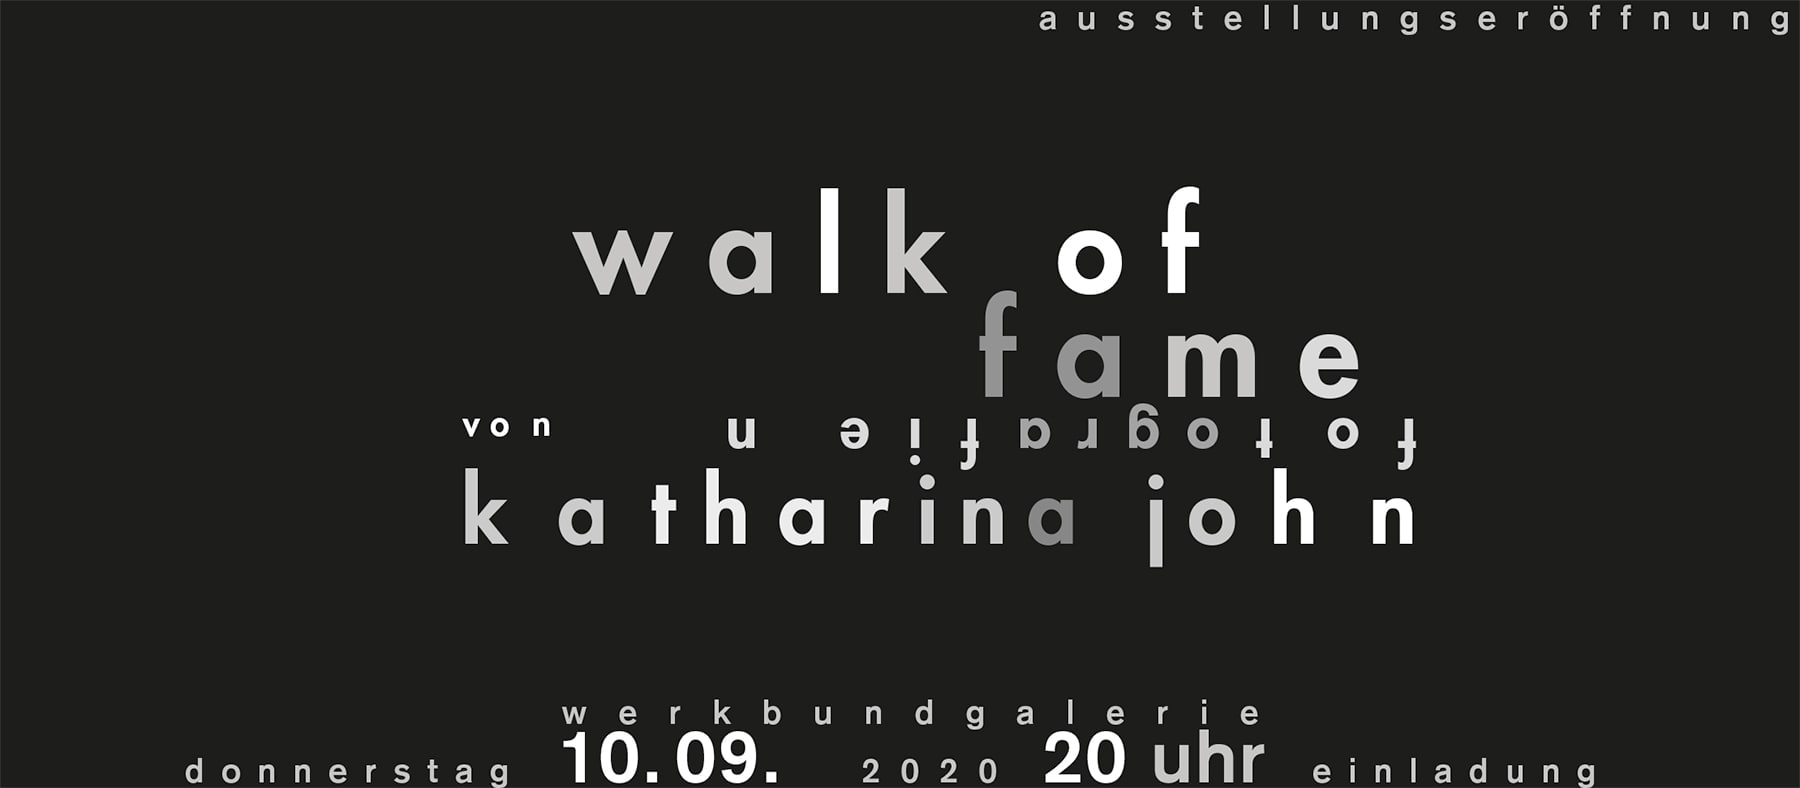 Deutscher Werkbund Berlin e. V., Katharina John, Fotografien, Walk of Fame